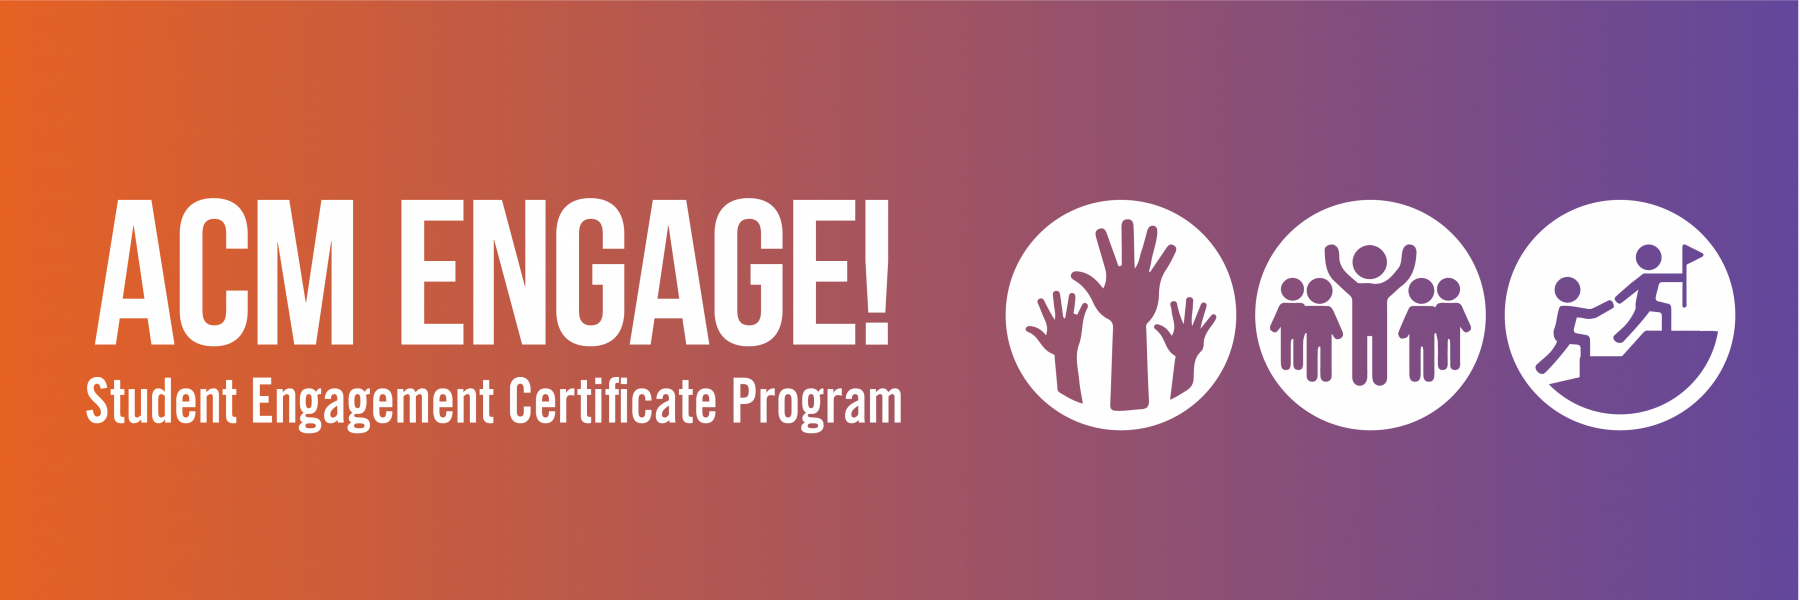 ACM Engage! Student Certificate Program Banner